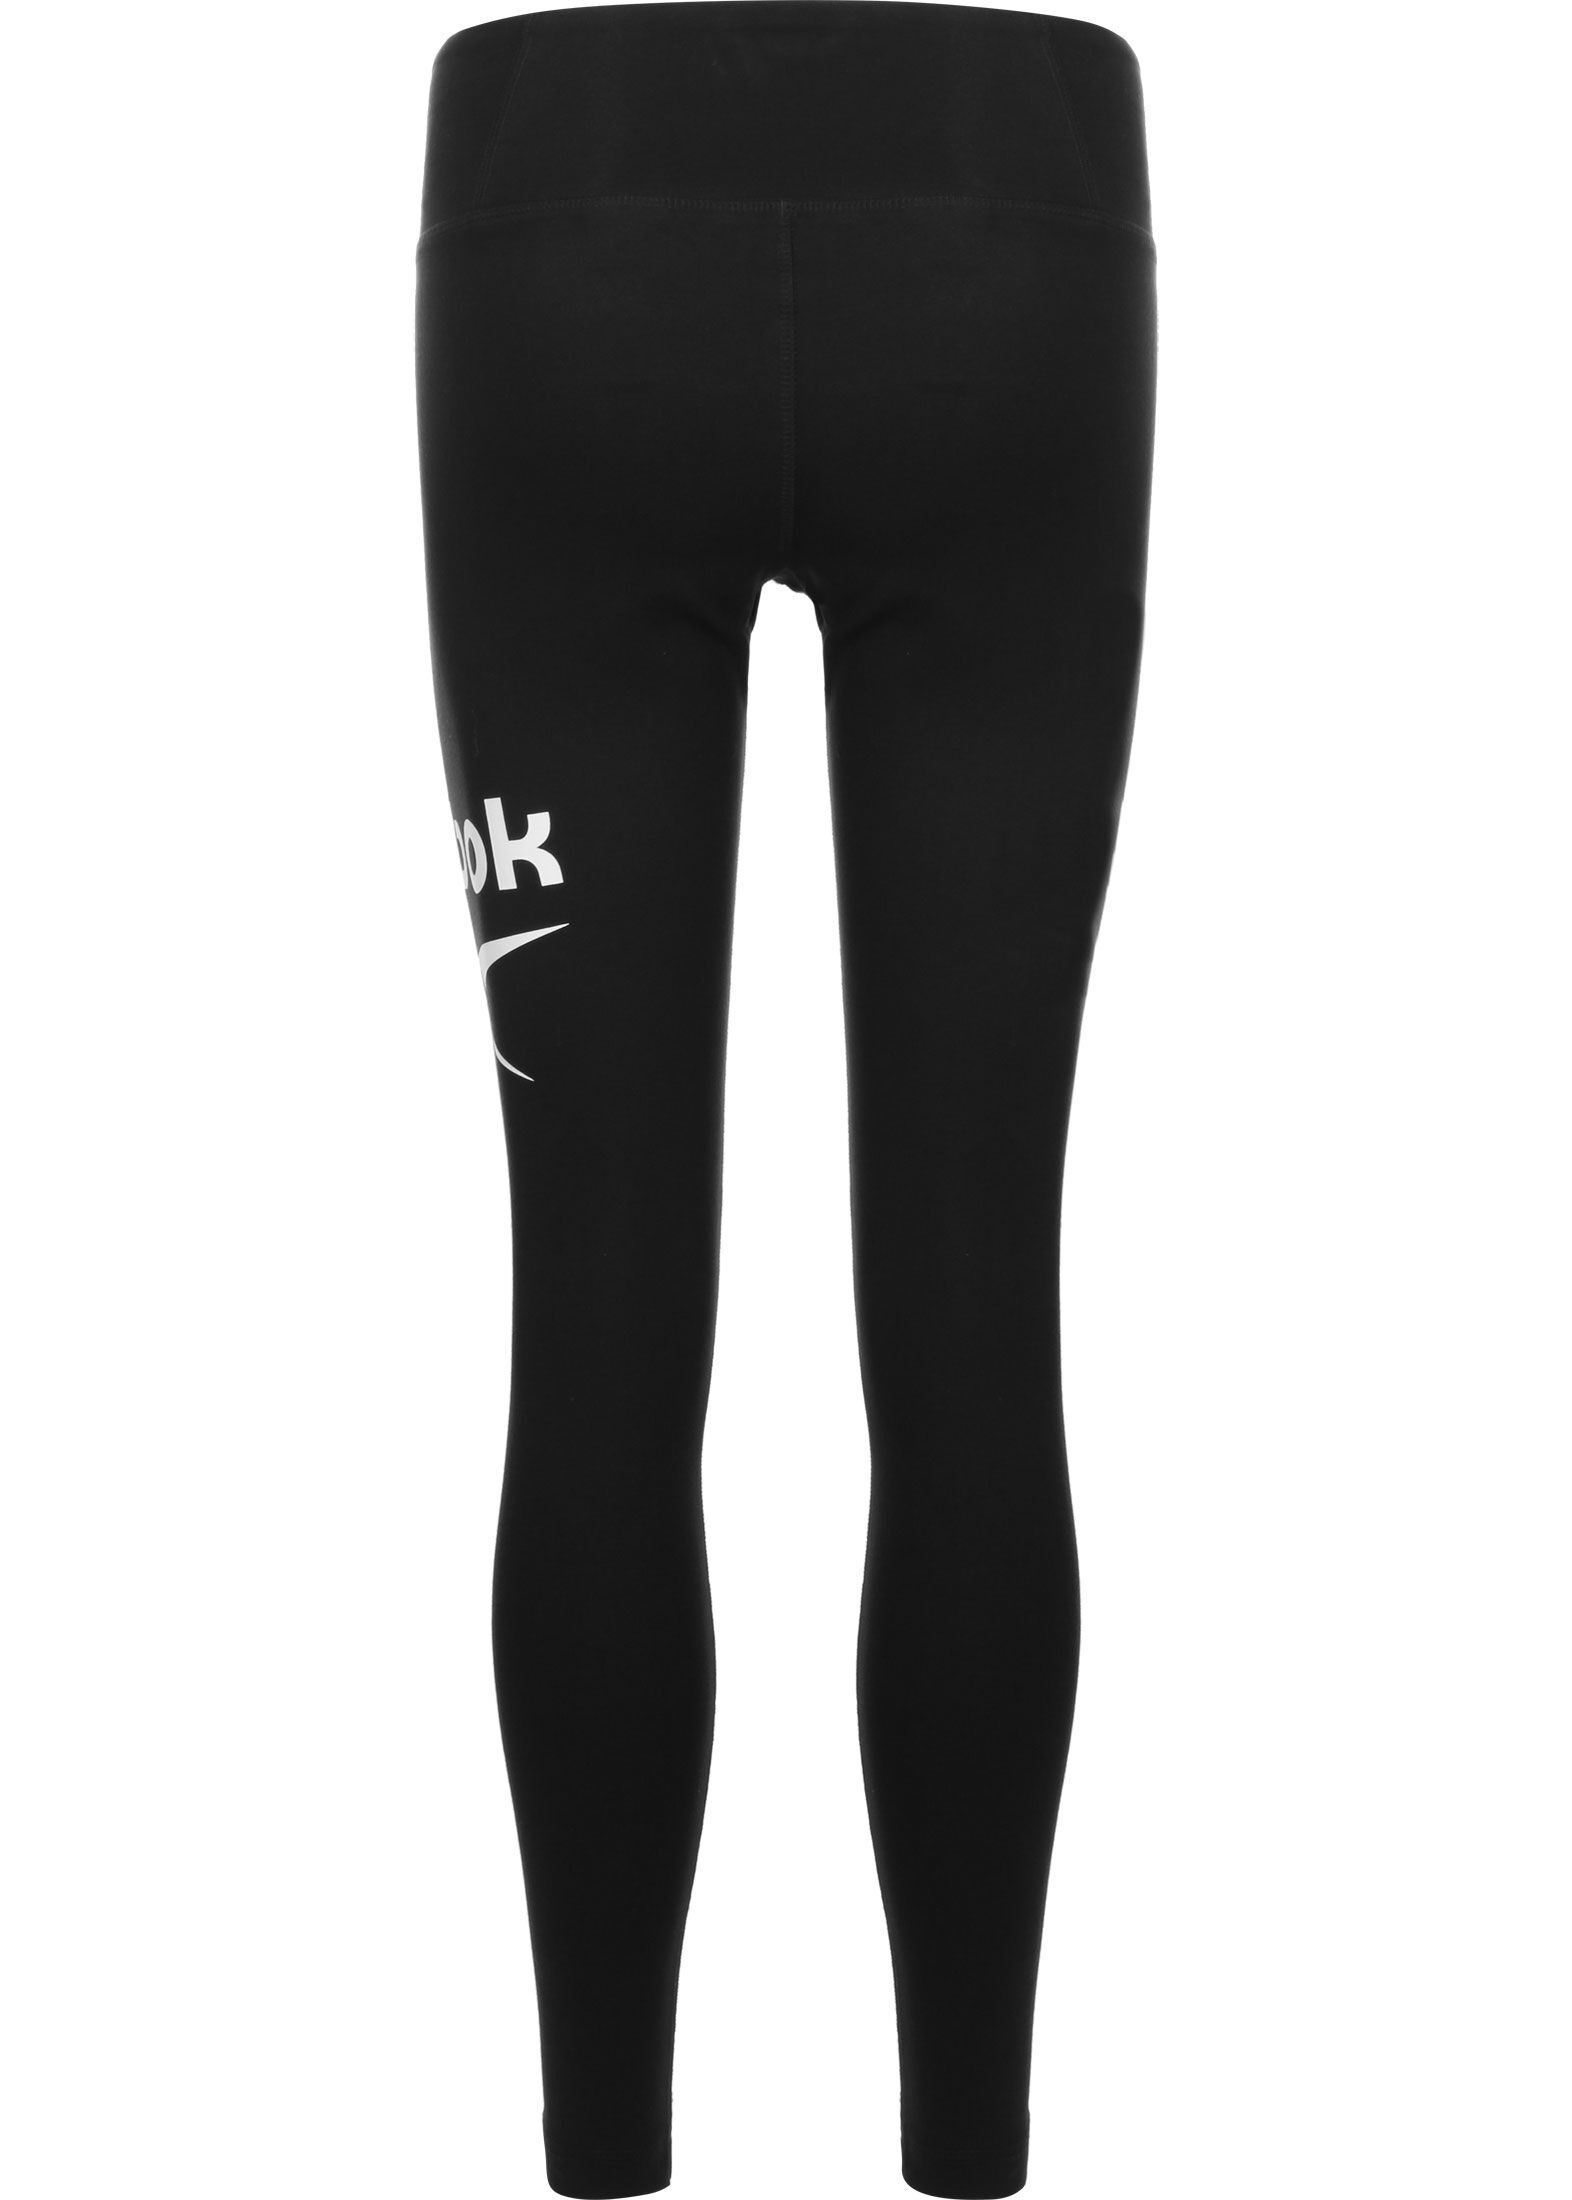 tlg.) bestellen »Damen Cotton | online Leggings«, Big BAUR Reebok (1 Leggings Identity Reebok Logo